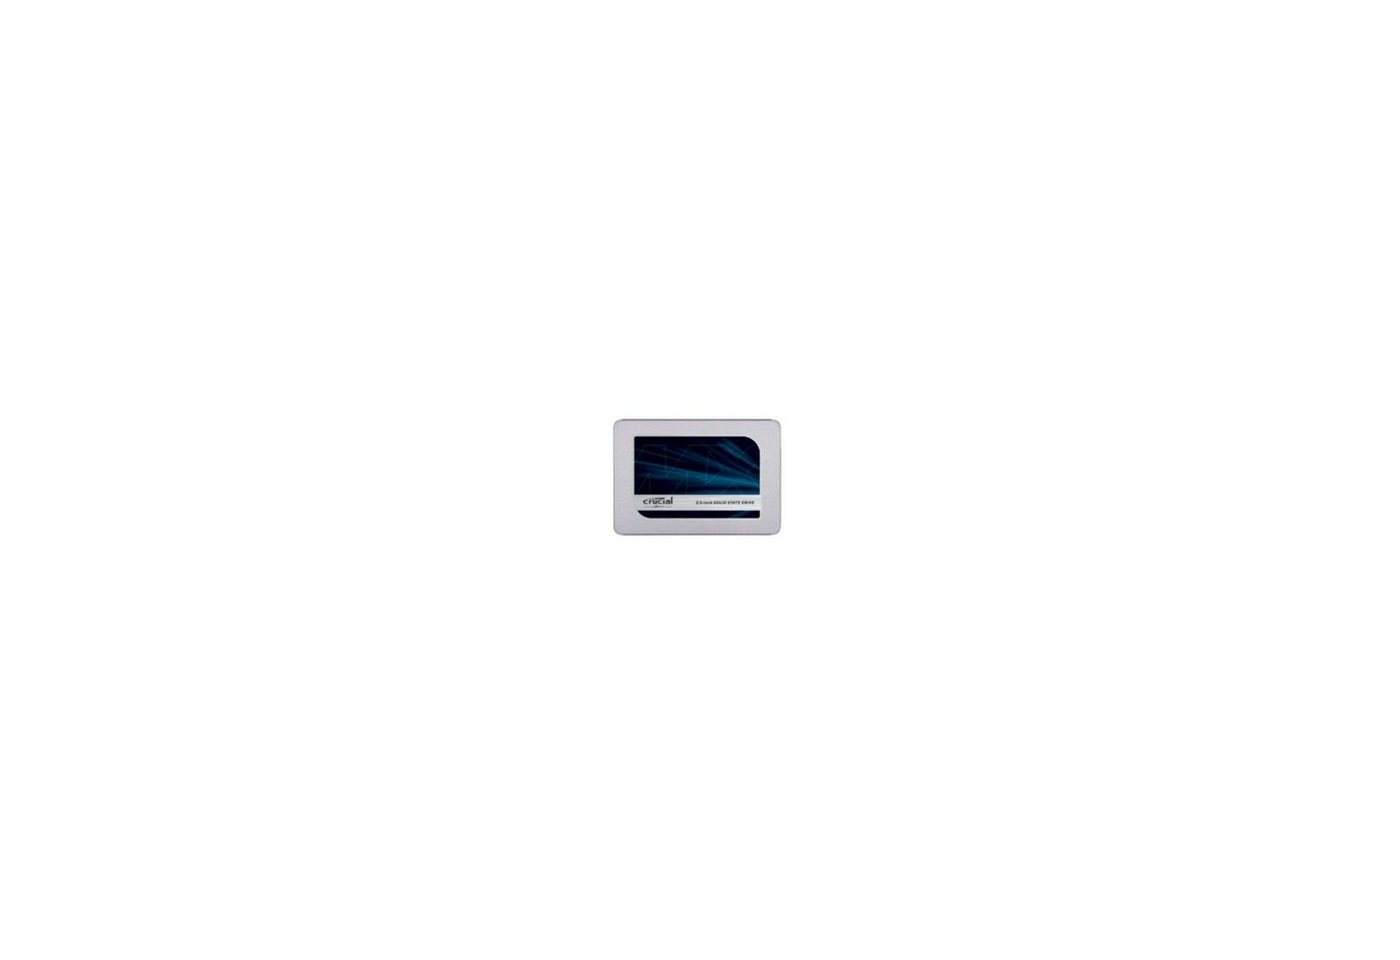 Crucial MX500 interne SSD von Crucial